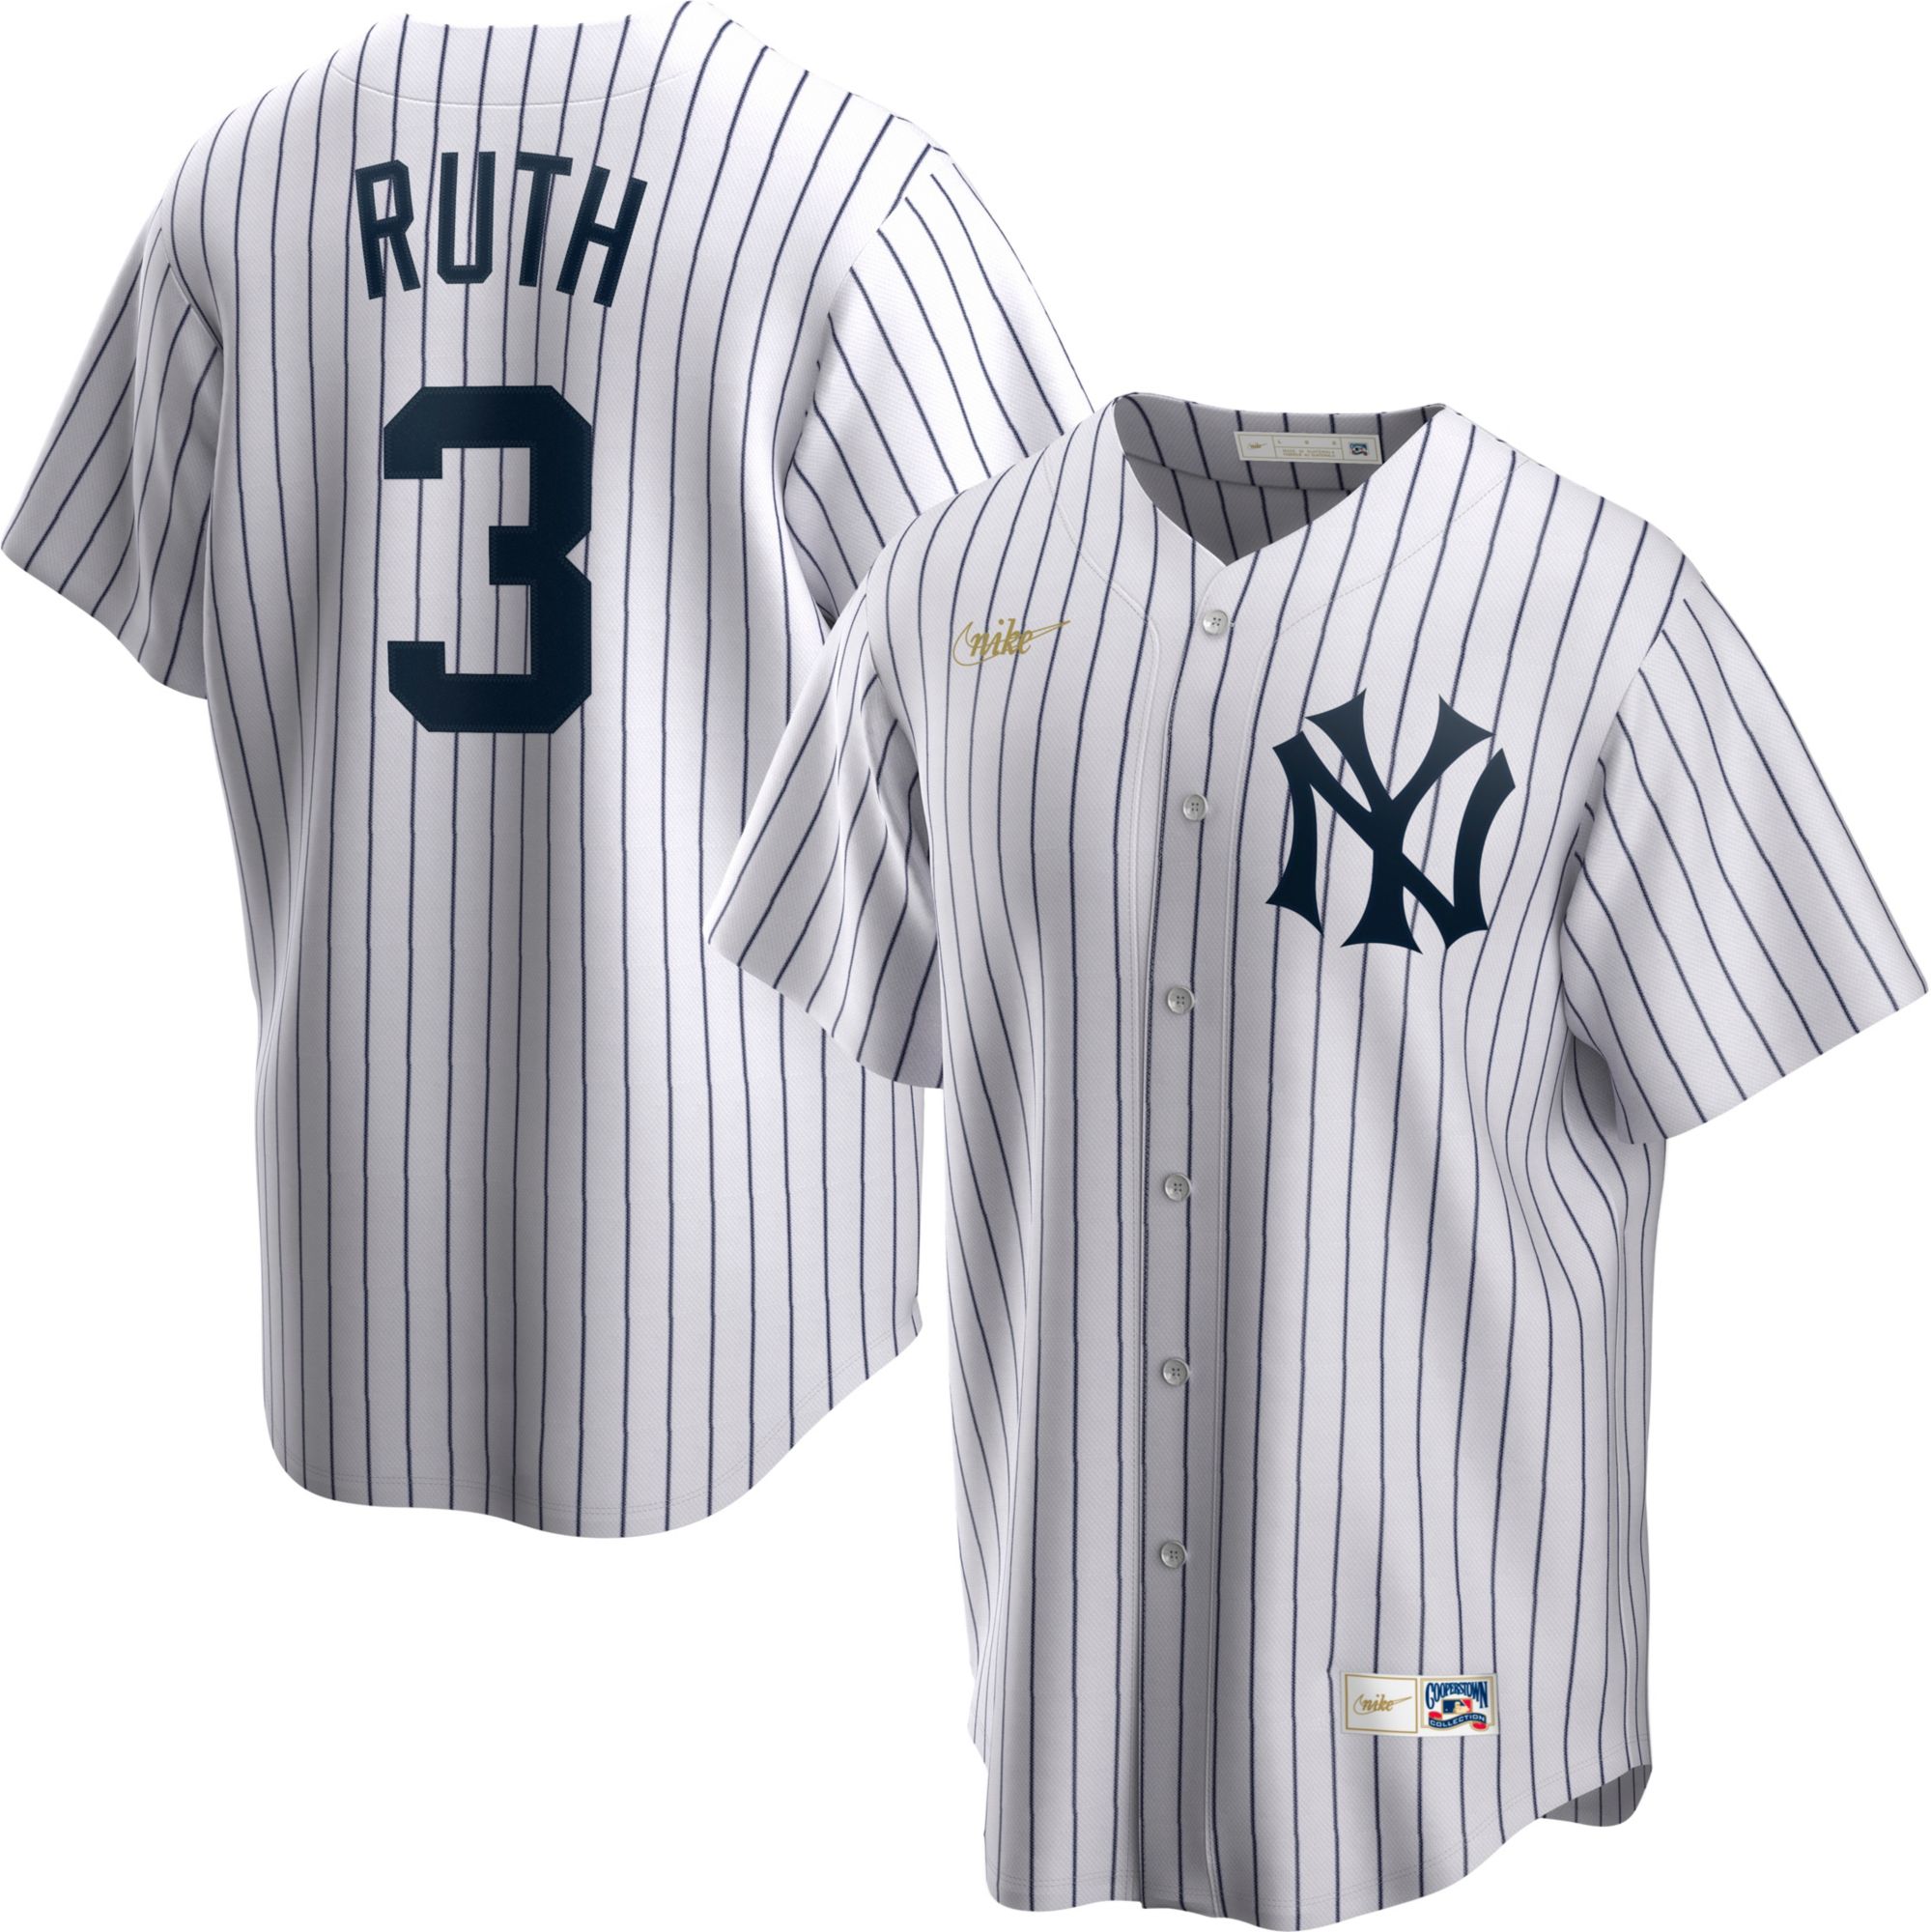 Captain 99 Aaron Judge NY Yankees shirt - Freedomdesign